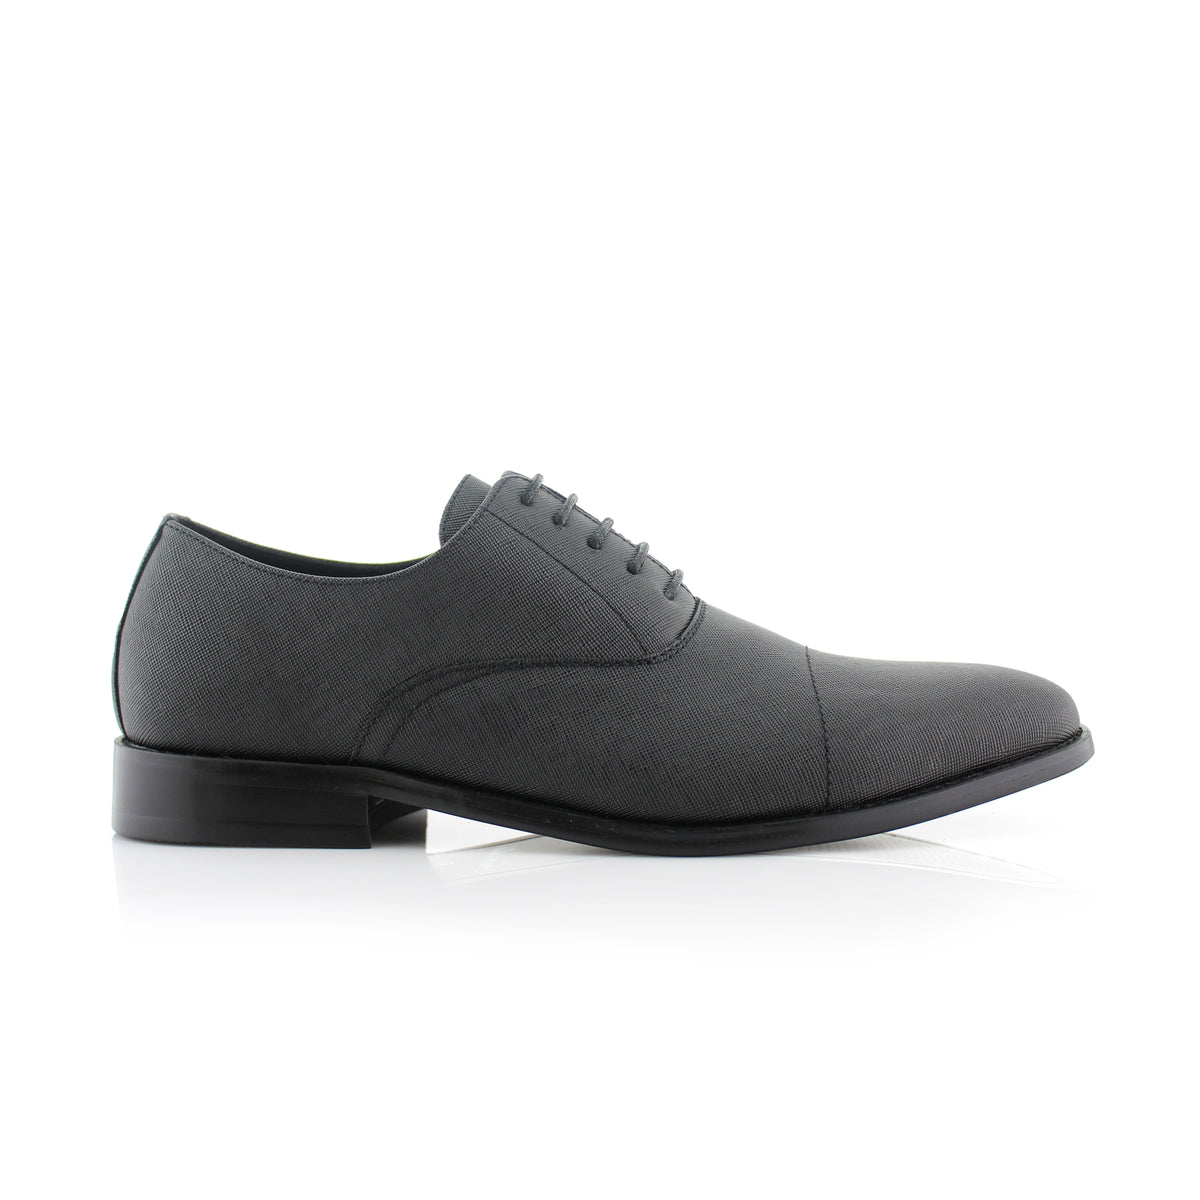 Men's Shoes For Work | Garret | Men's Classic Lace Up Oxford Shoes